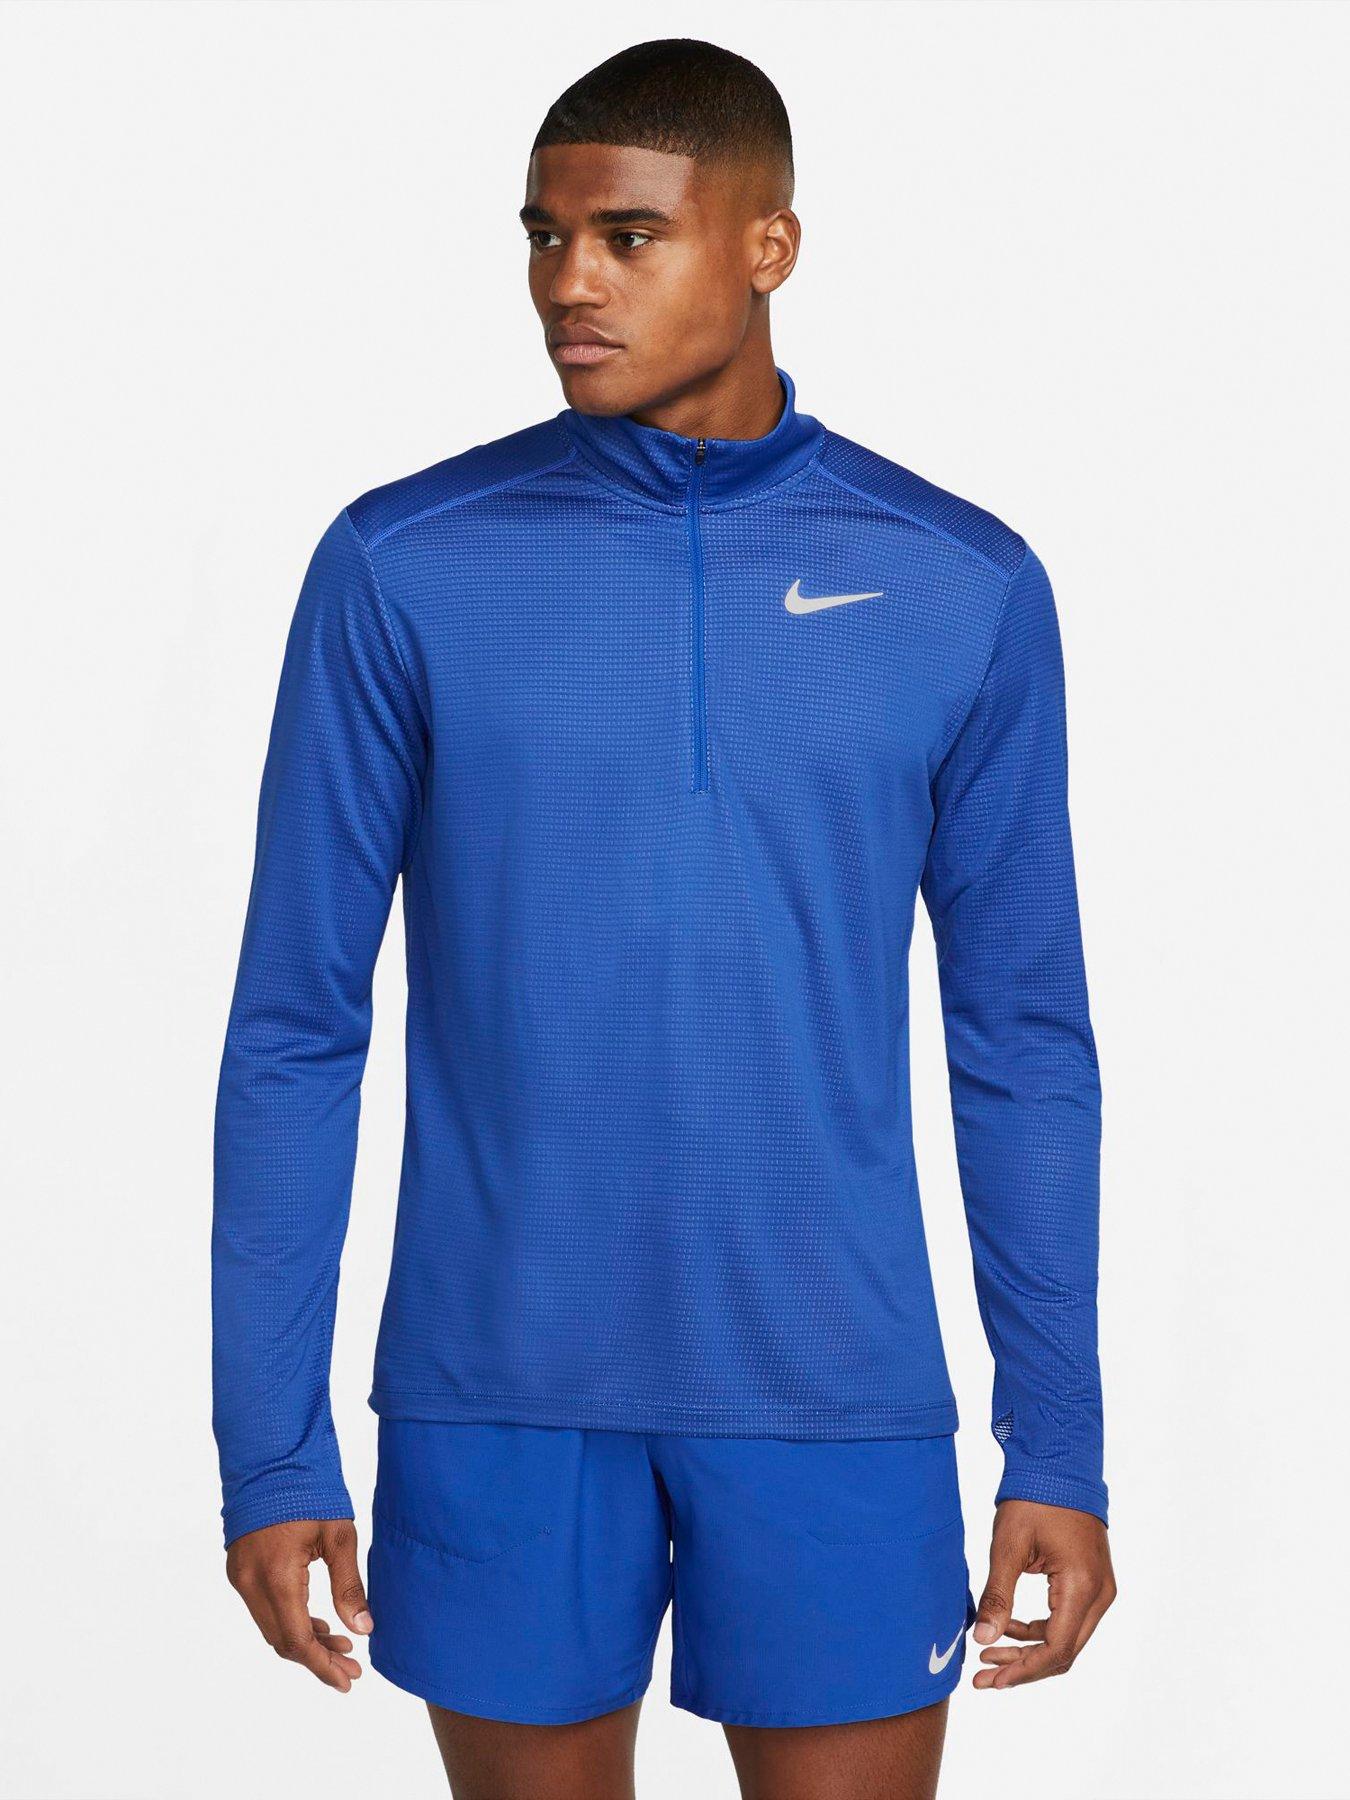 Nike Run Dri-FIT Pacer Top 1/2 Zip Top - Blue/Grey | littlewoods.com